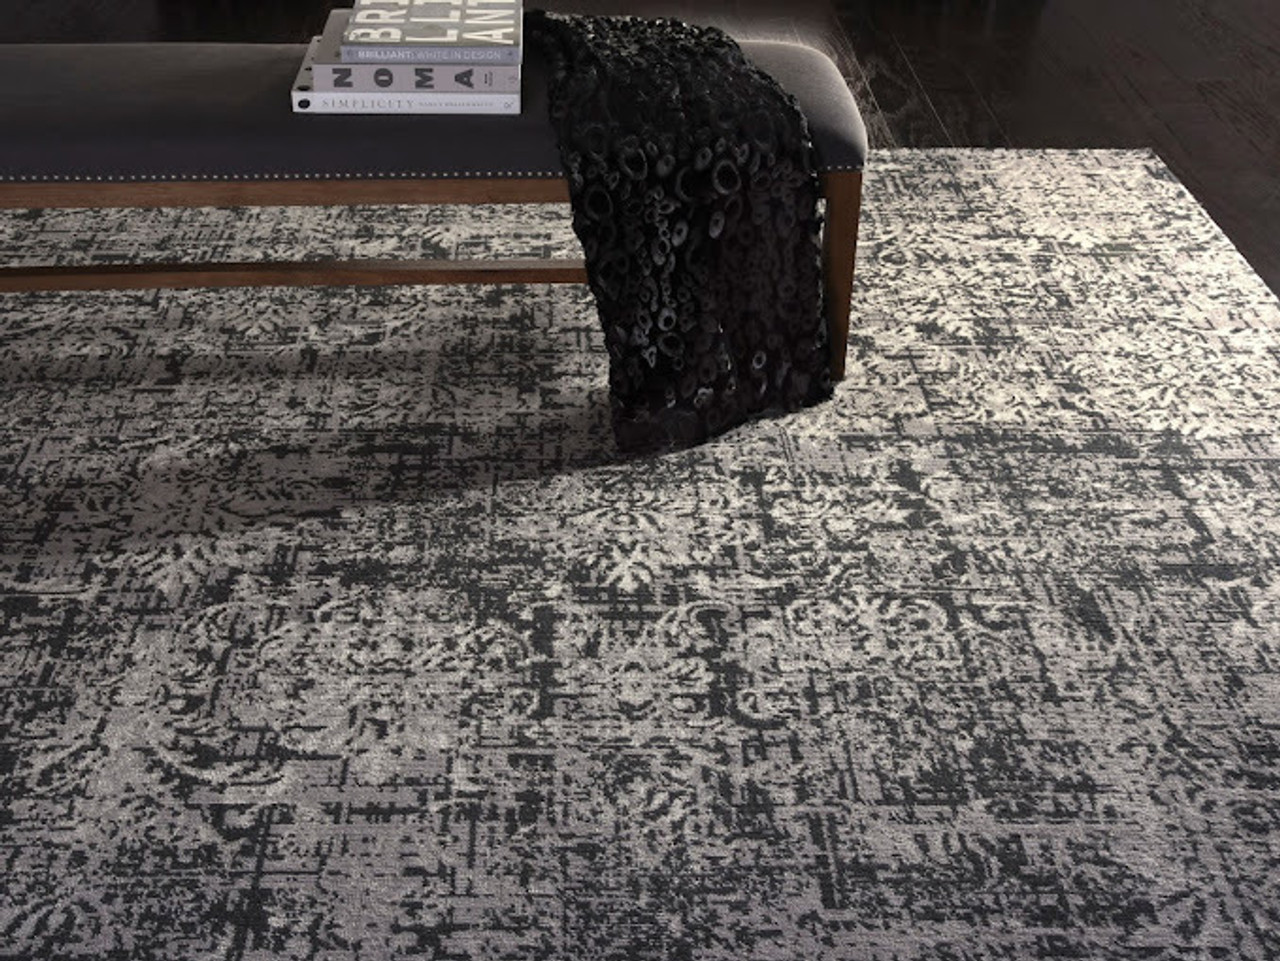 Carpet Remnant options to make a custom rug